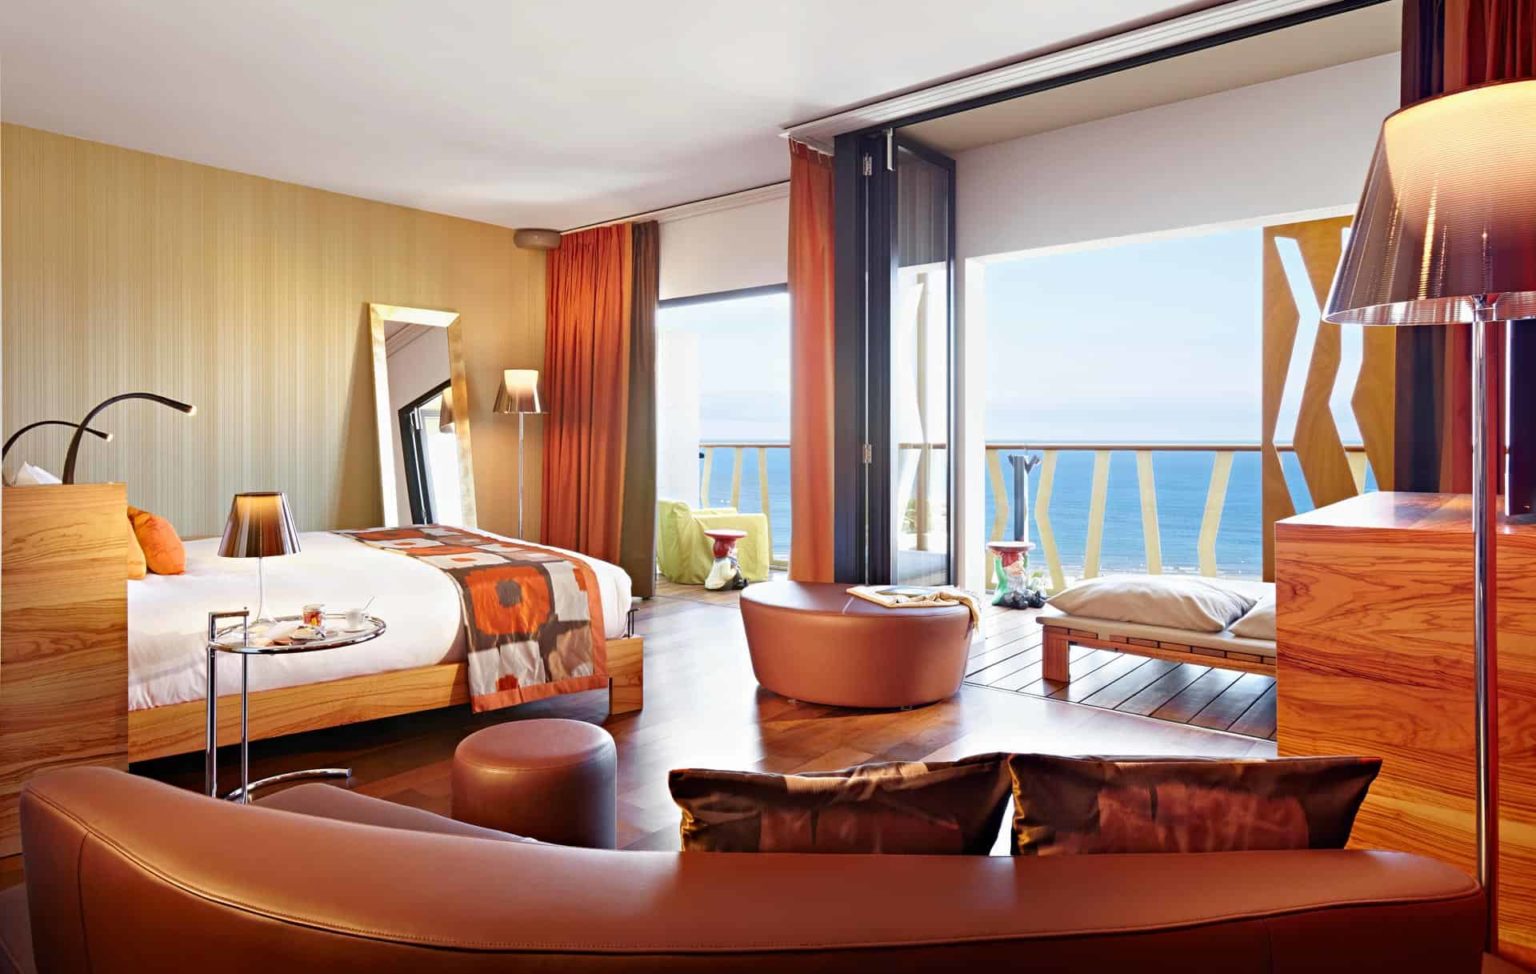 Bohemia Suites & Spa bedroom suite overlooking the ocean